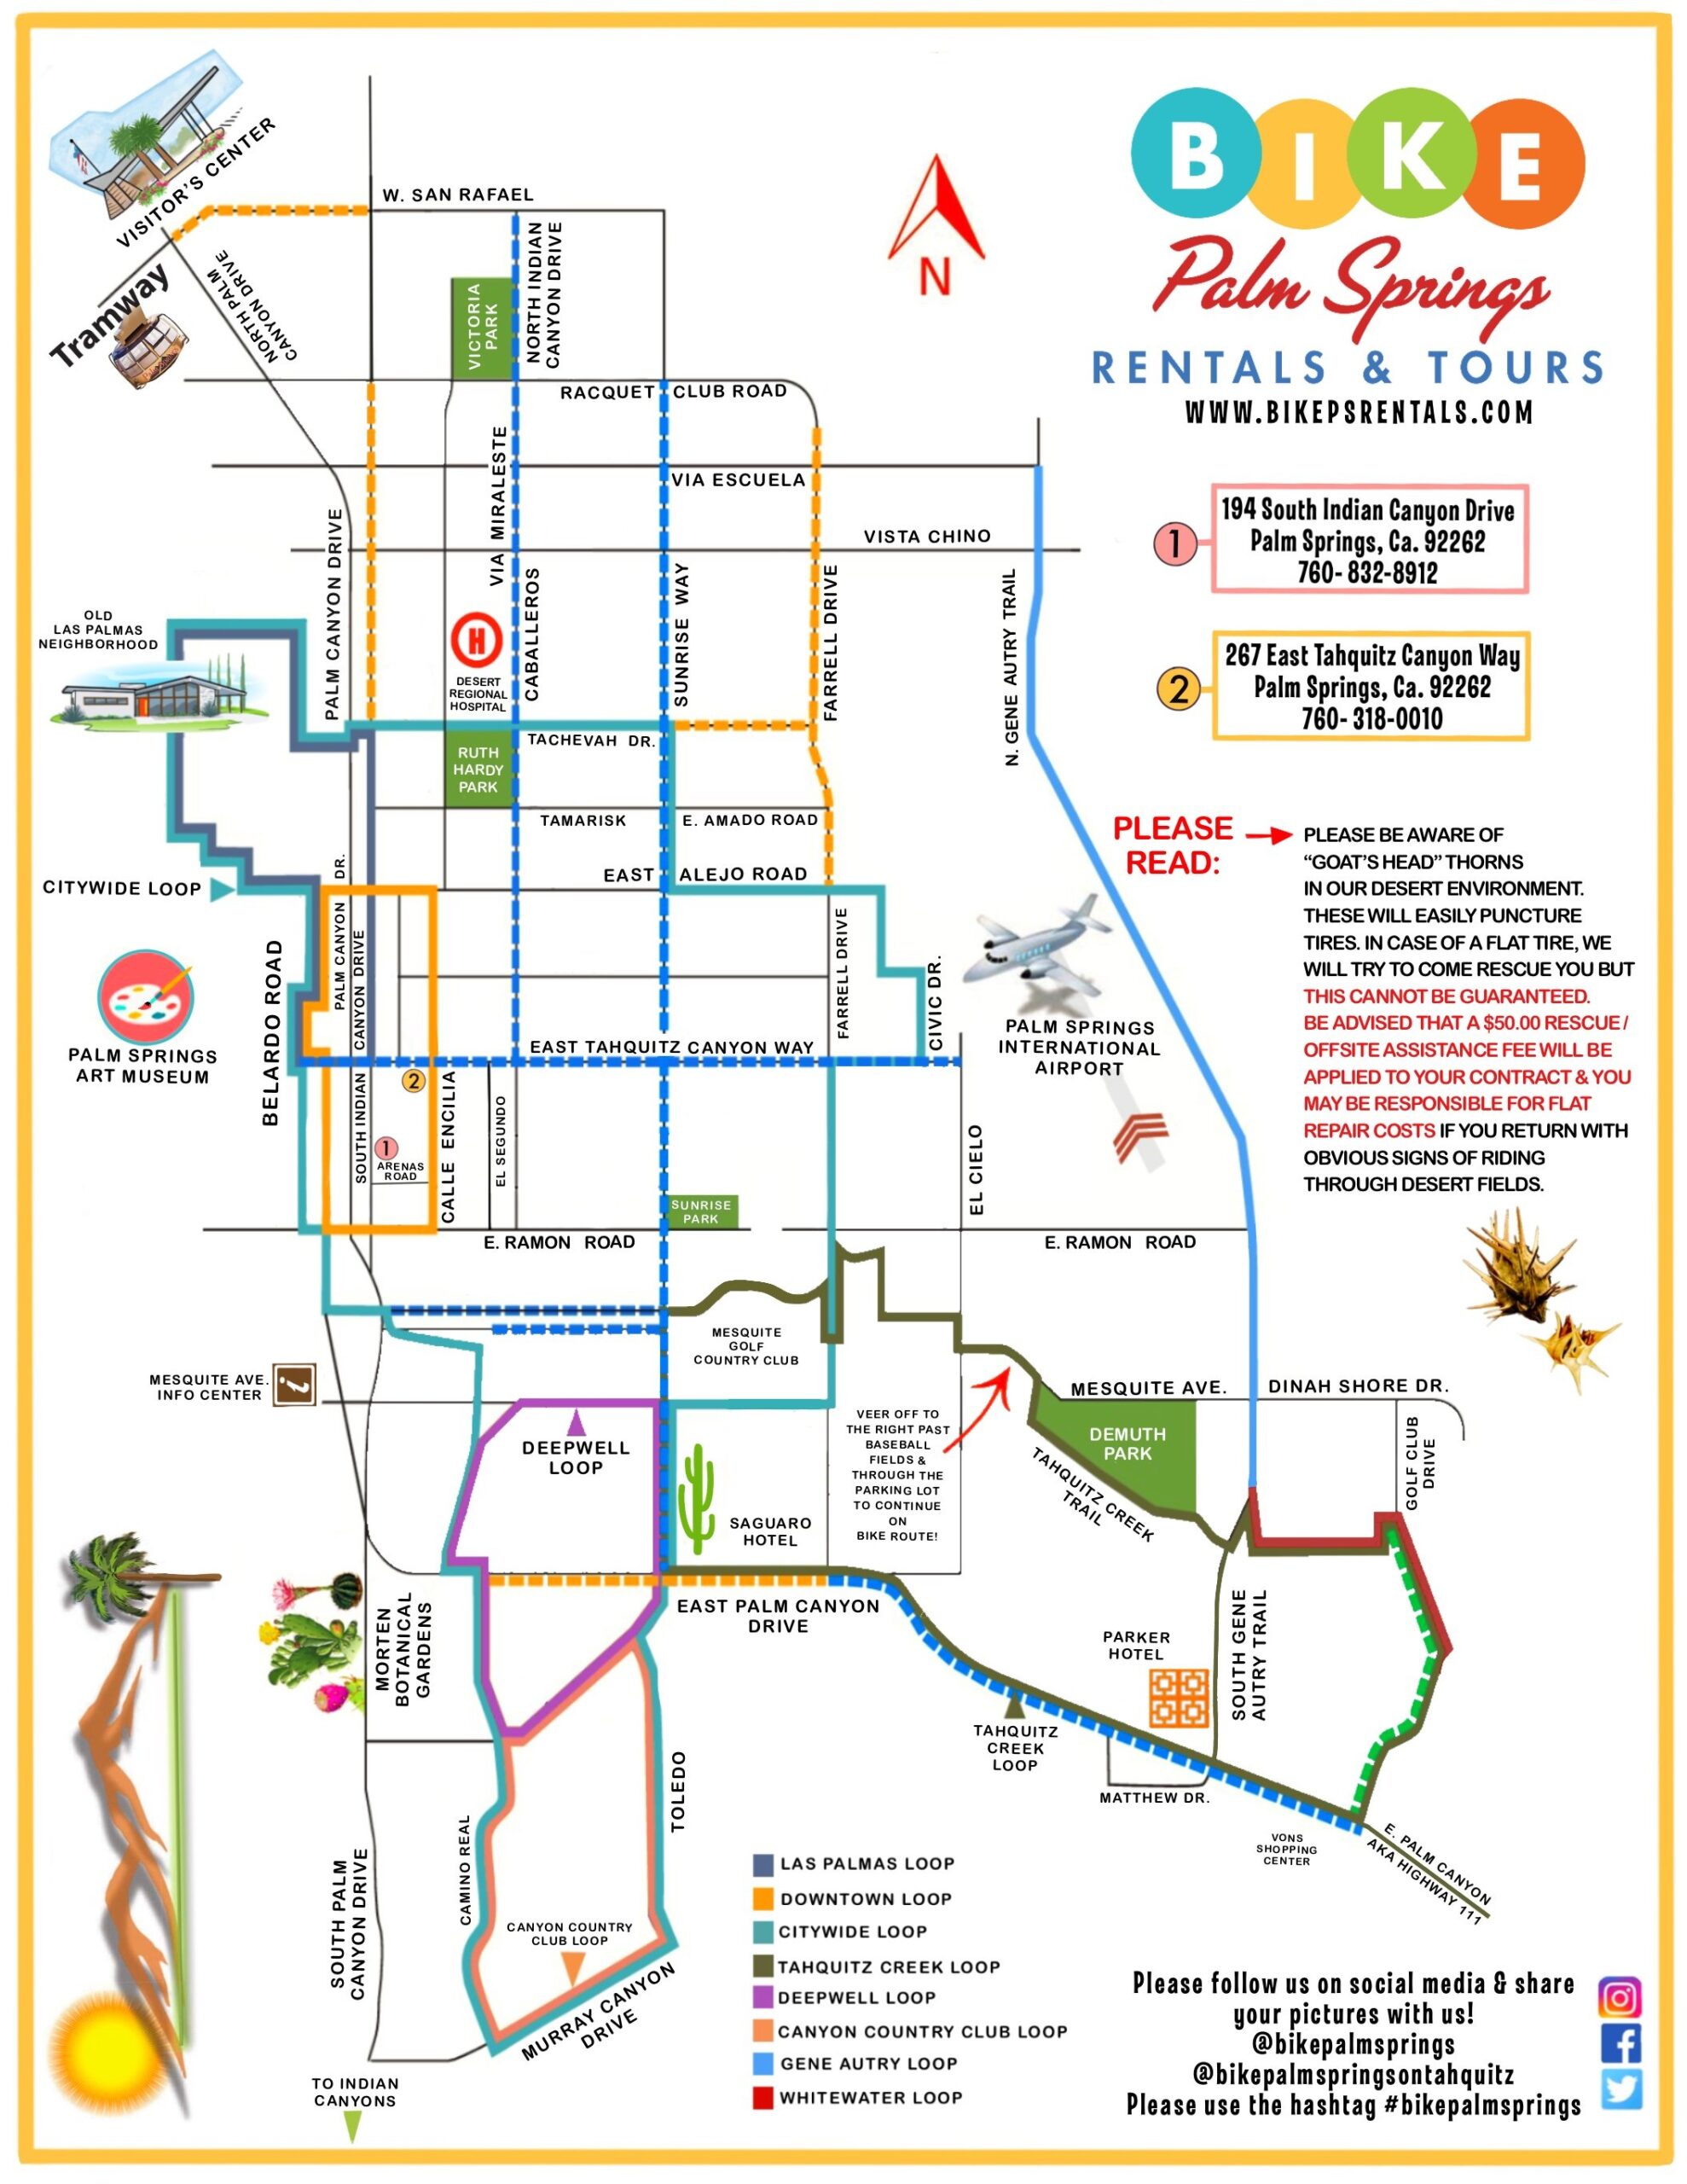 Bike Palm Springs map.